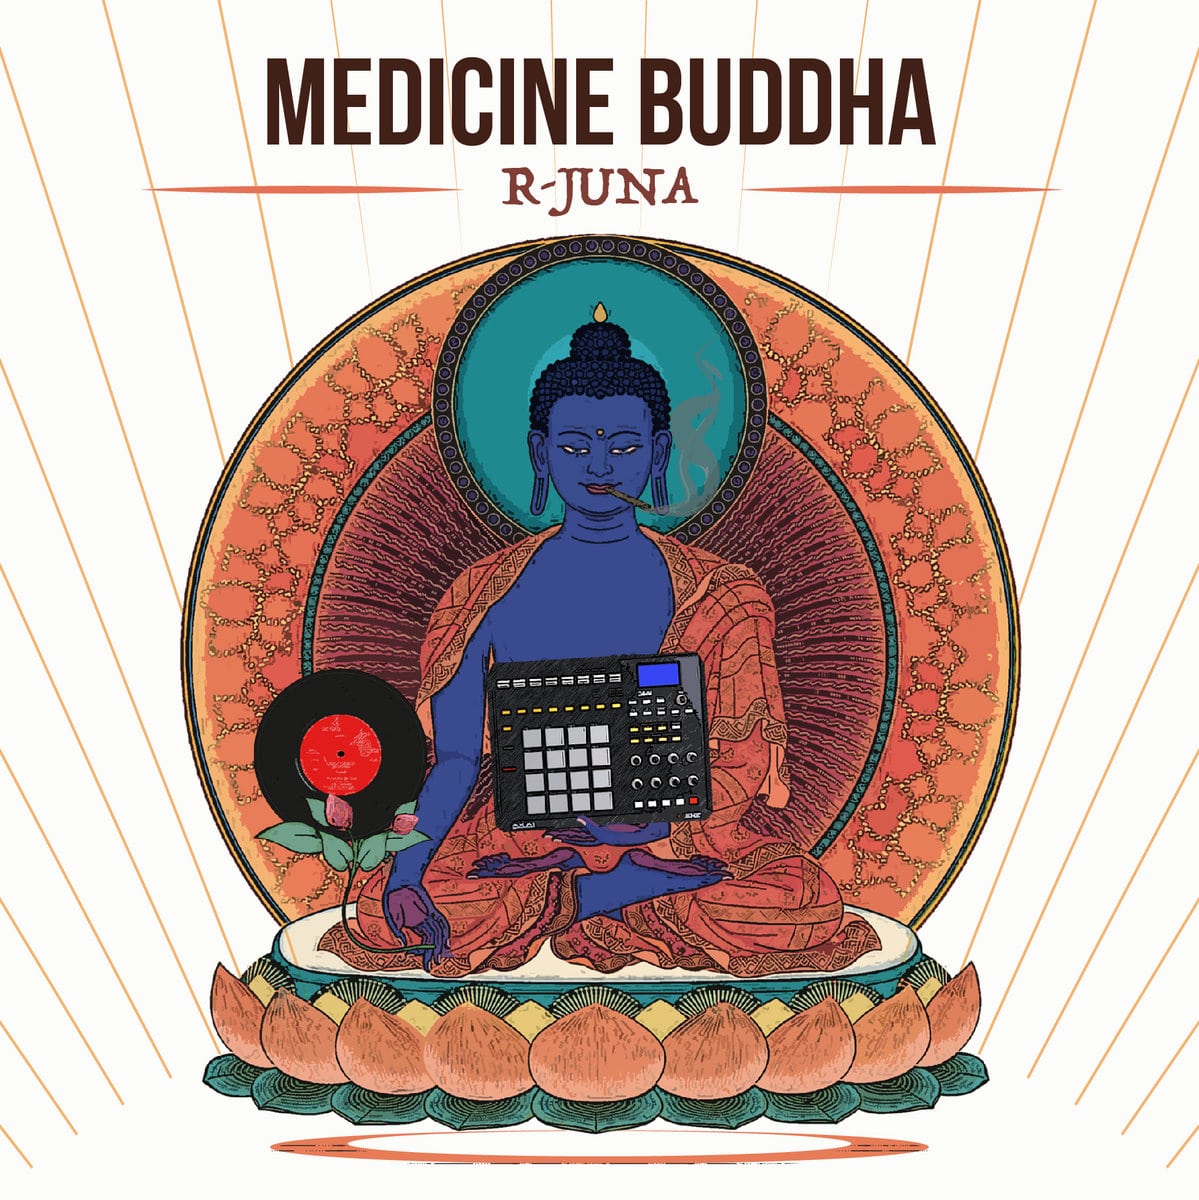 R-Juna - "Medicine Buddha" (Release)